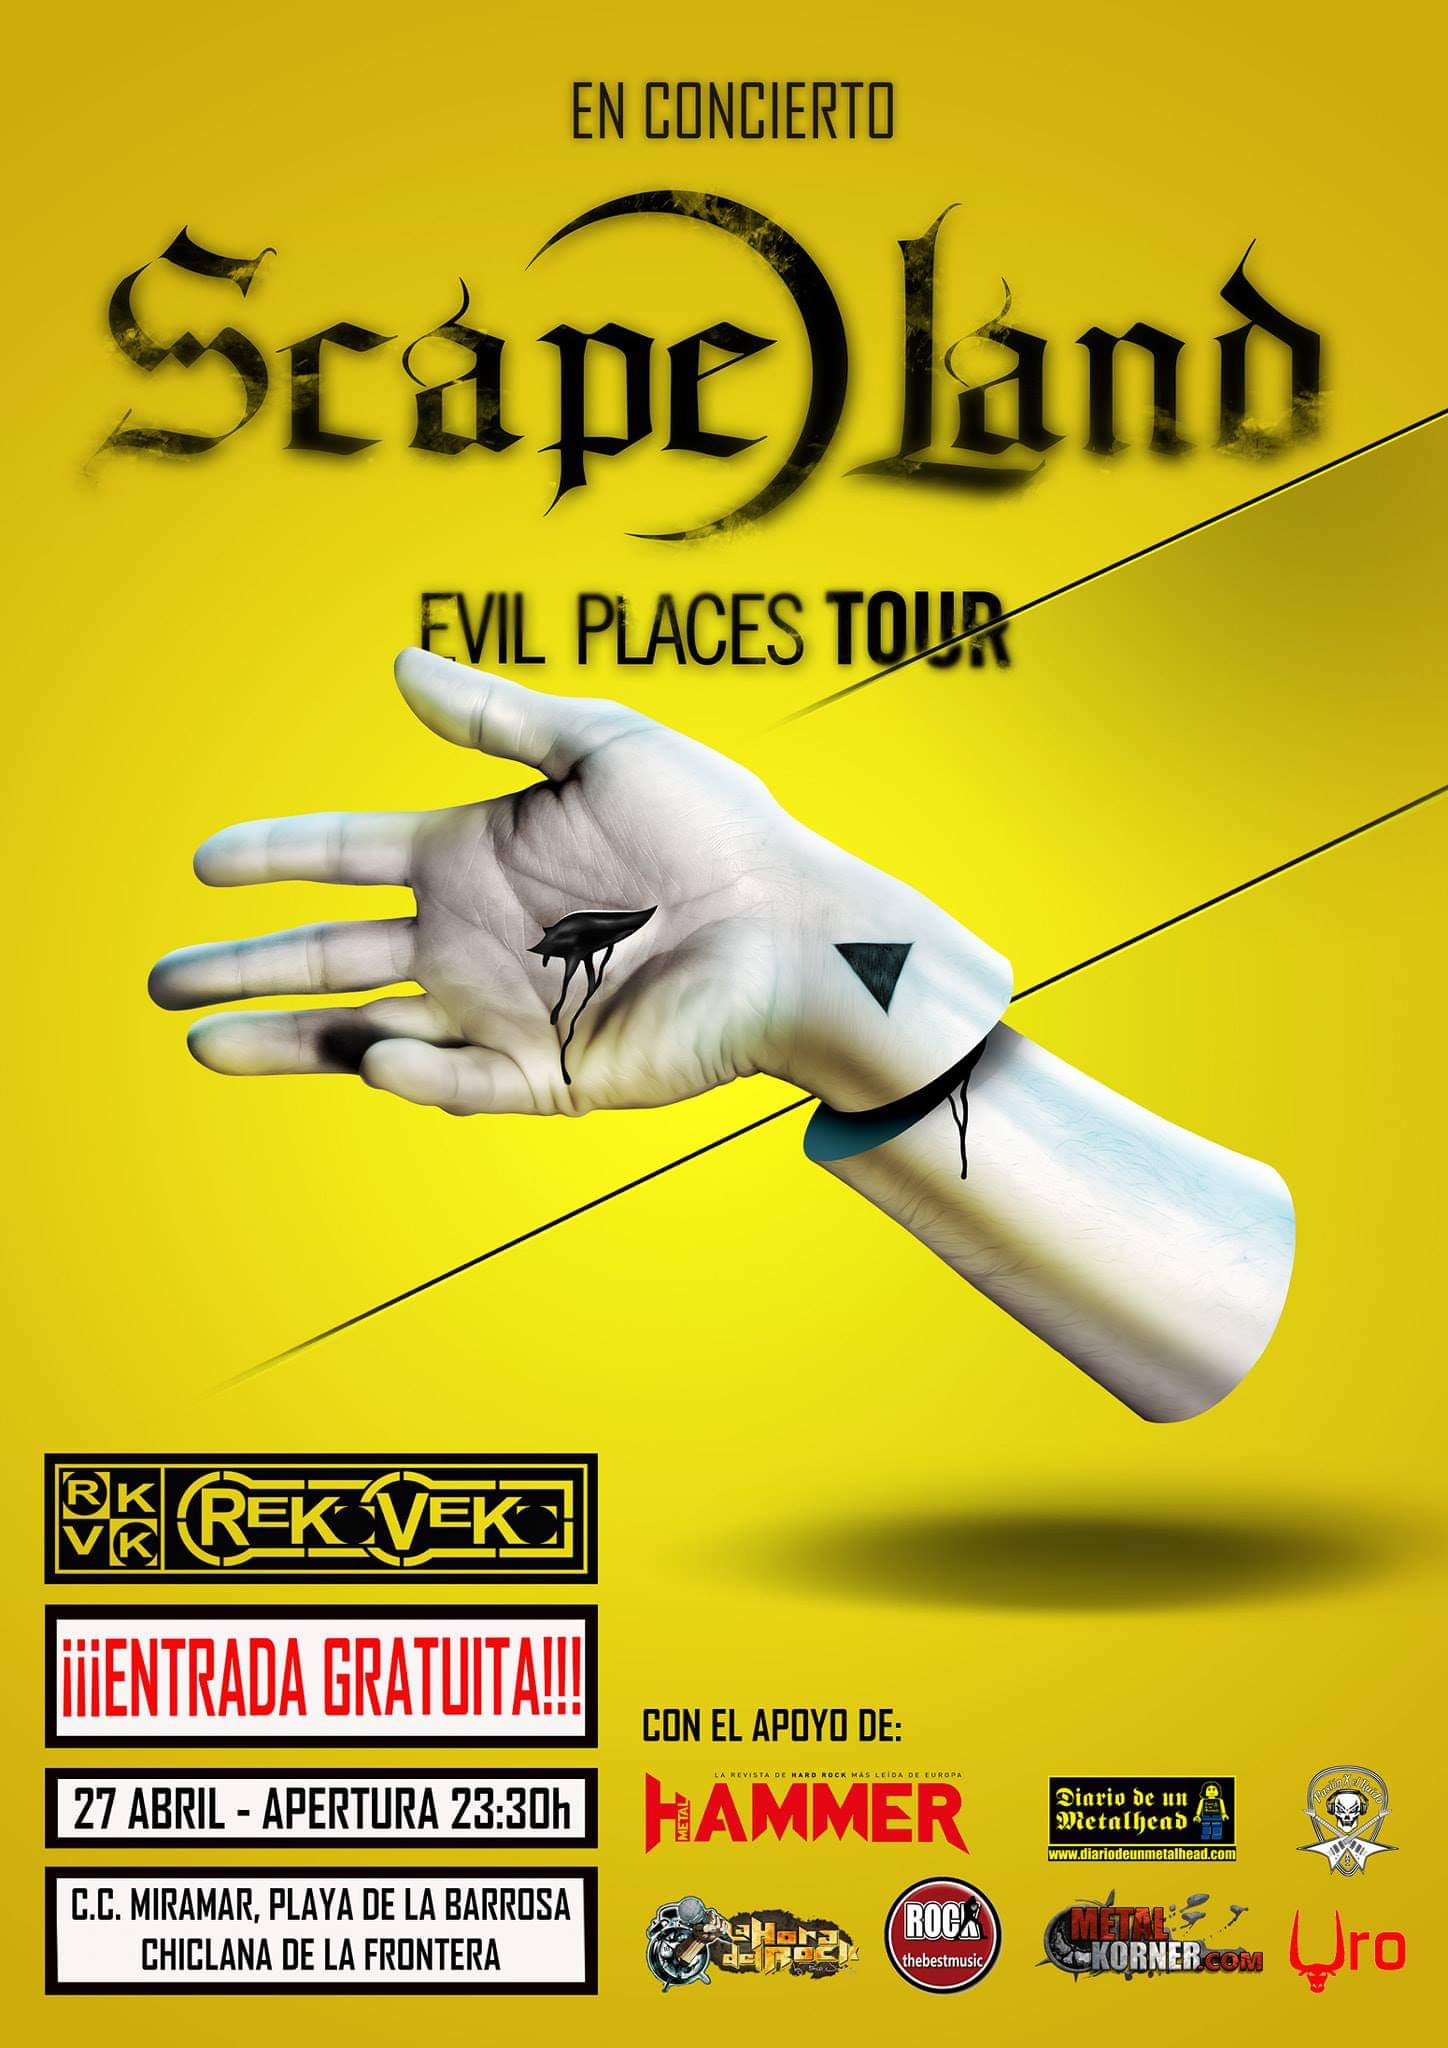 SCAPE LAND –  Nueva fecha confirmada dentro de su Evil Places Tour